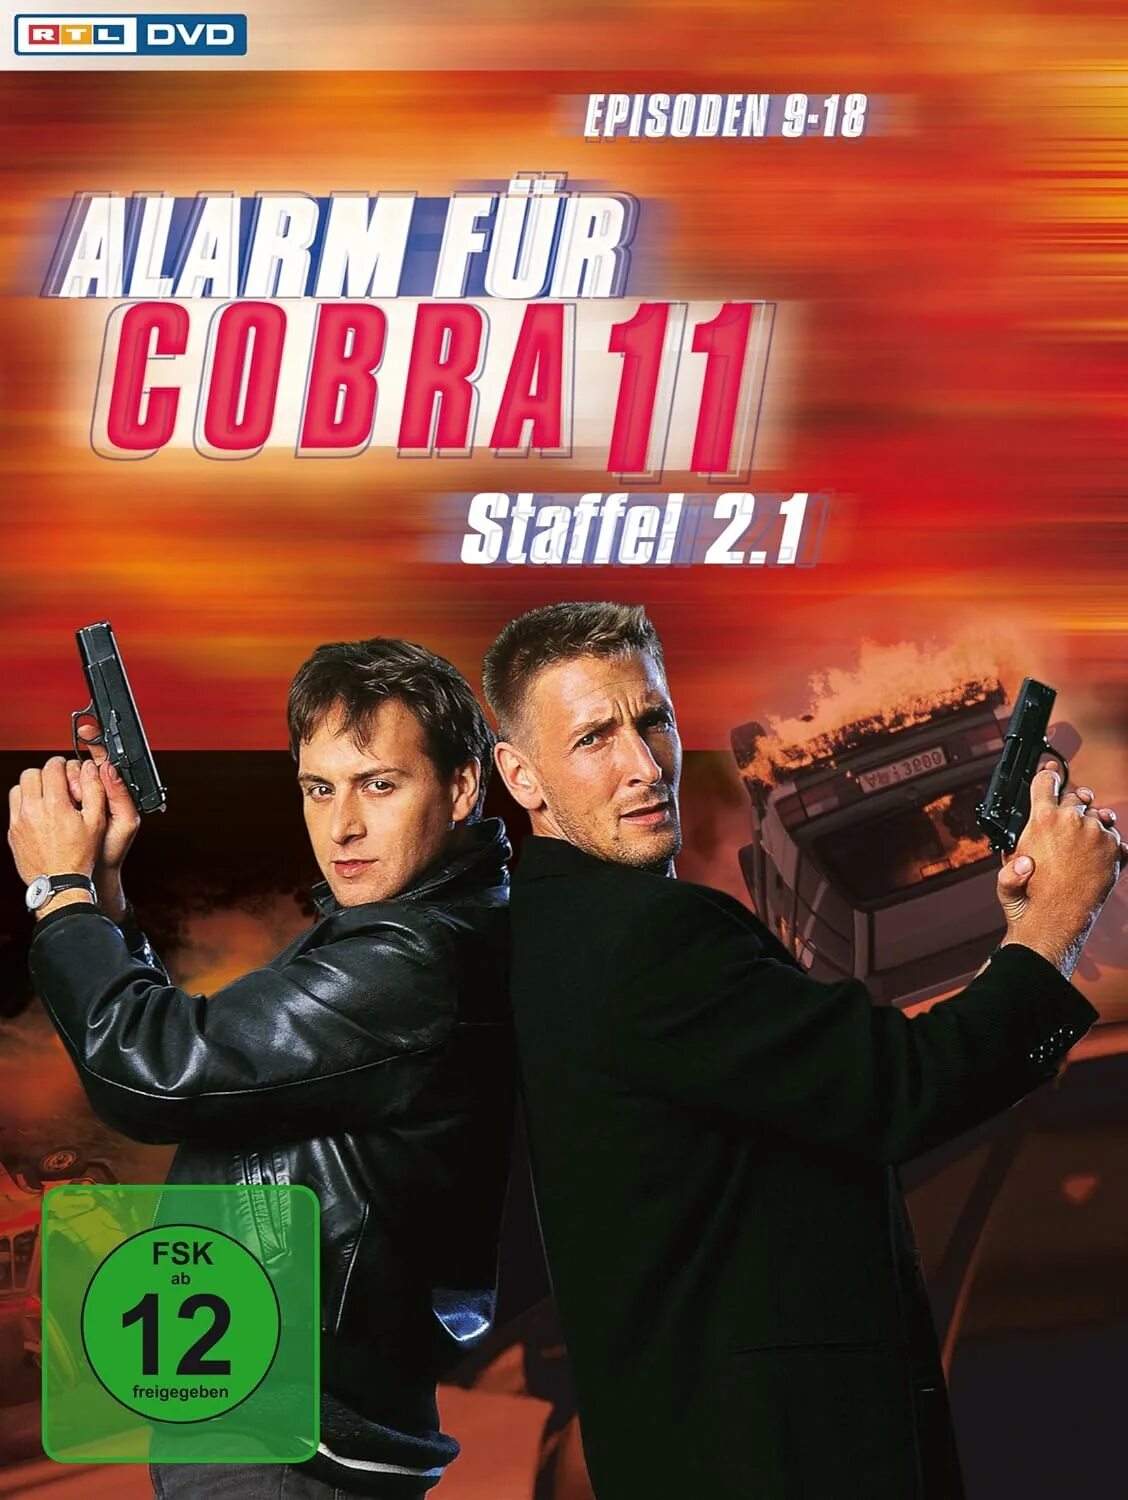 Alarm for cobra. Cobra 11 DVD 14. Alarm for Cobra 11.